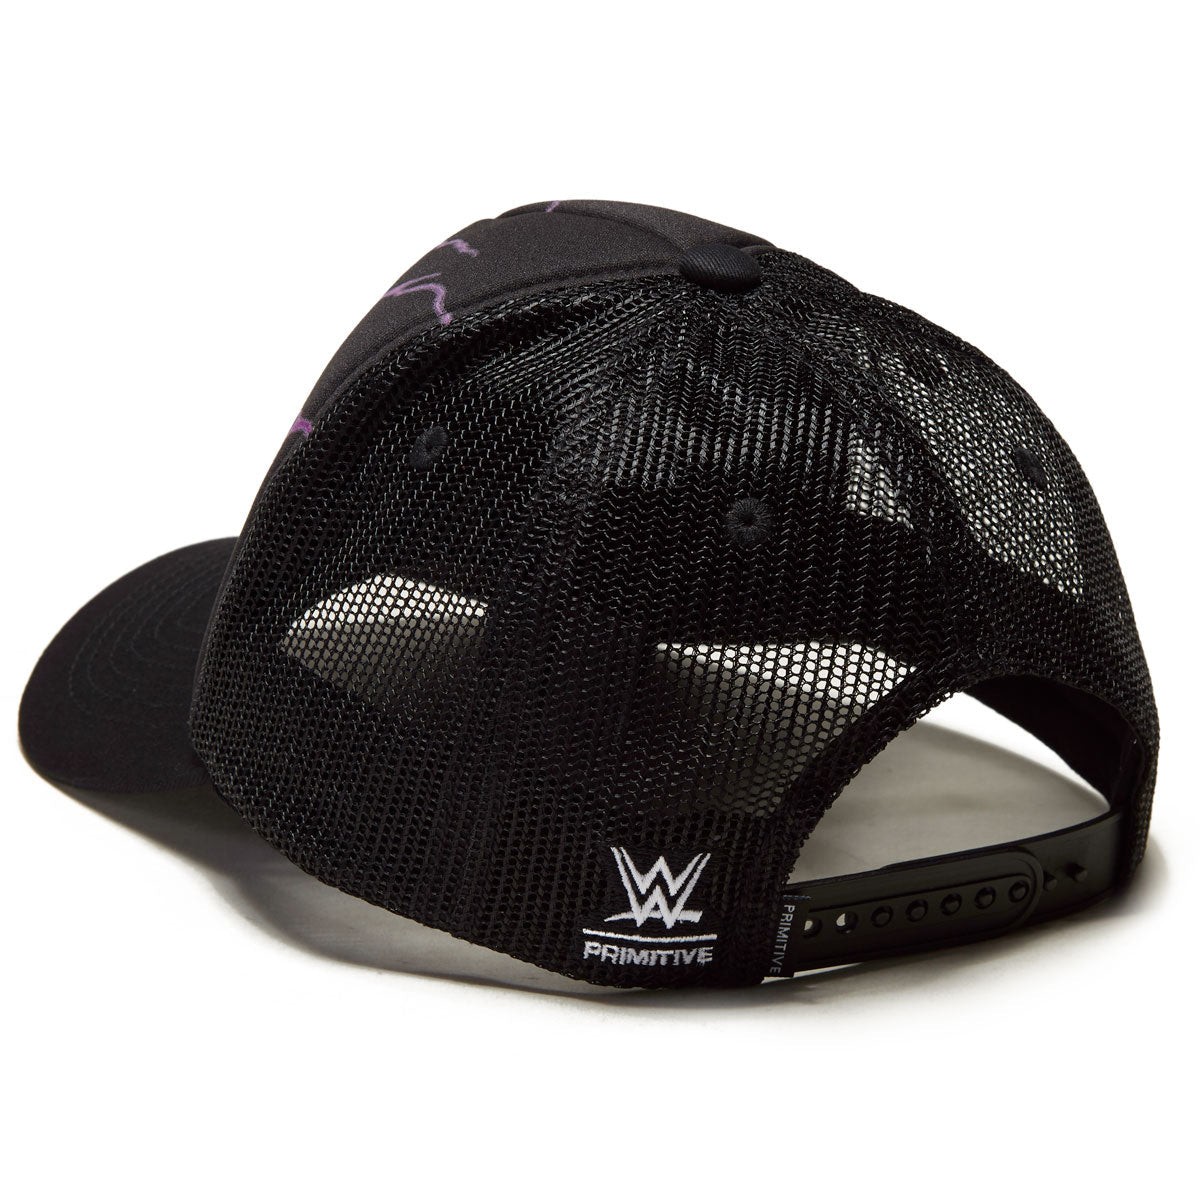 Primitive x WWE Deadman Forever Trucker Hat - Black image 2